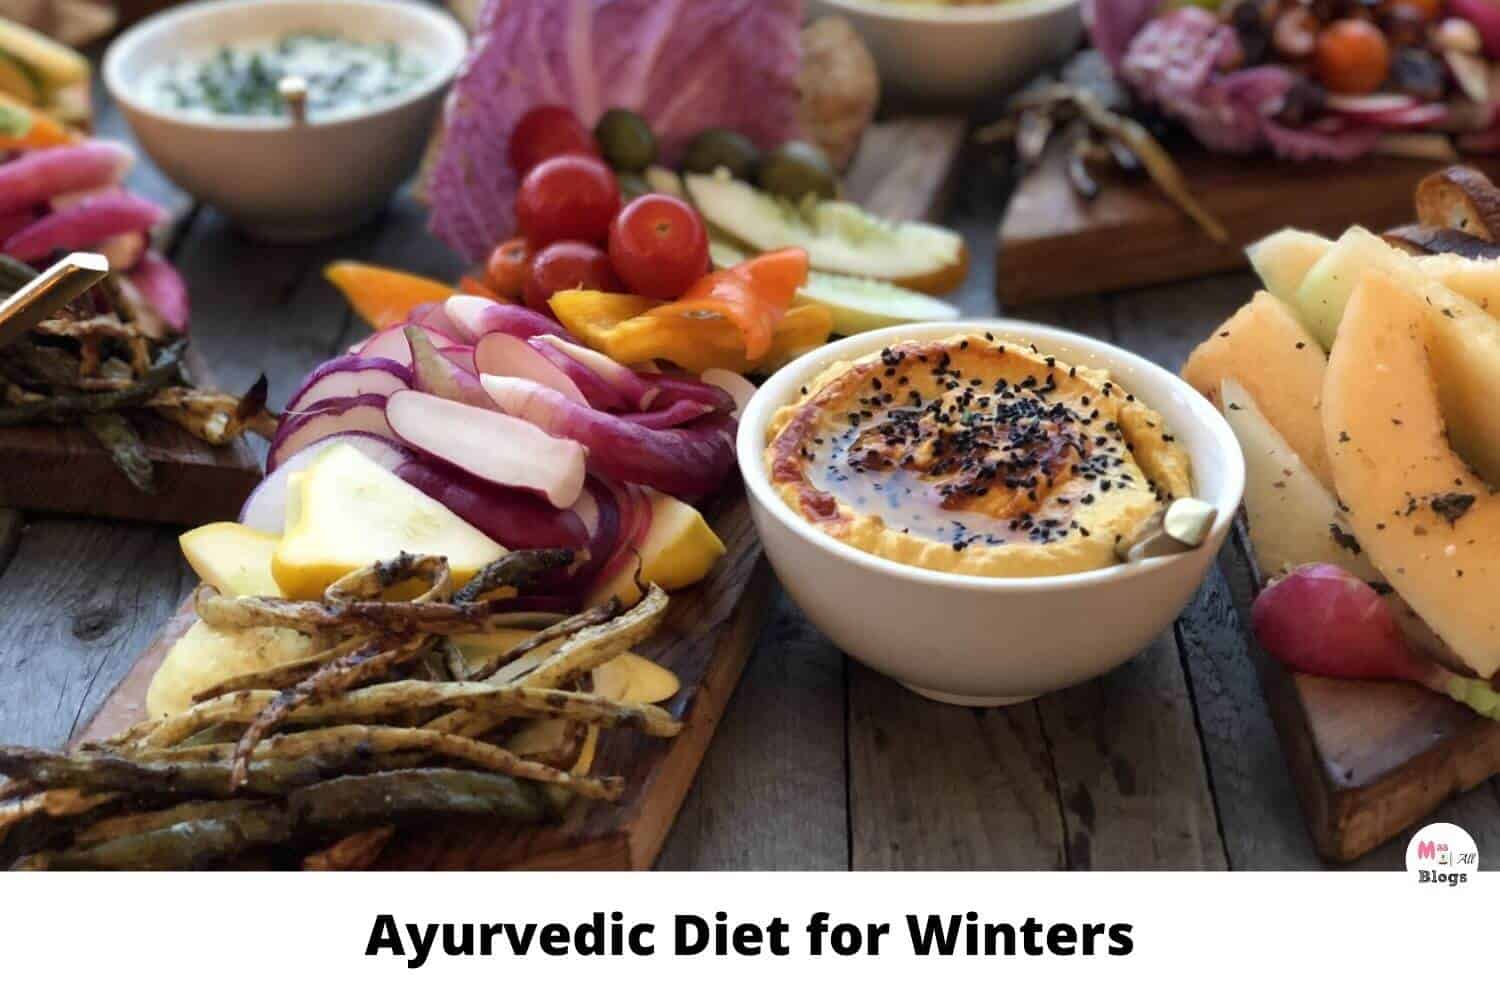 Ayurvedic diet for winters